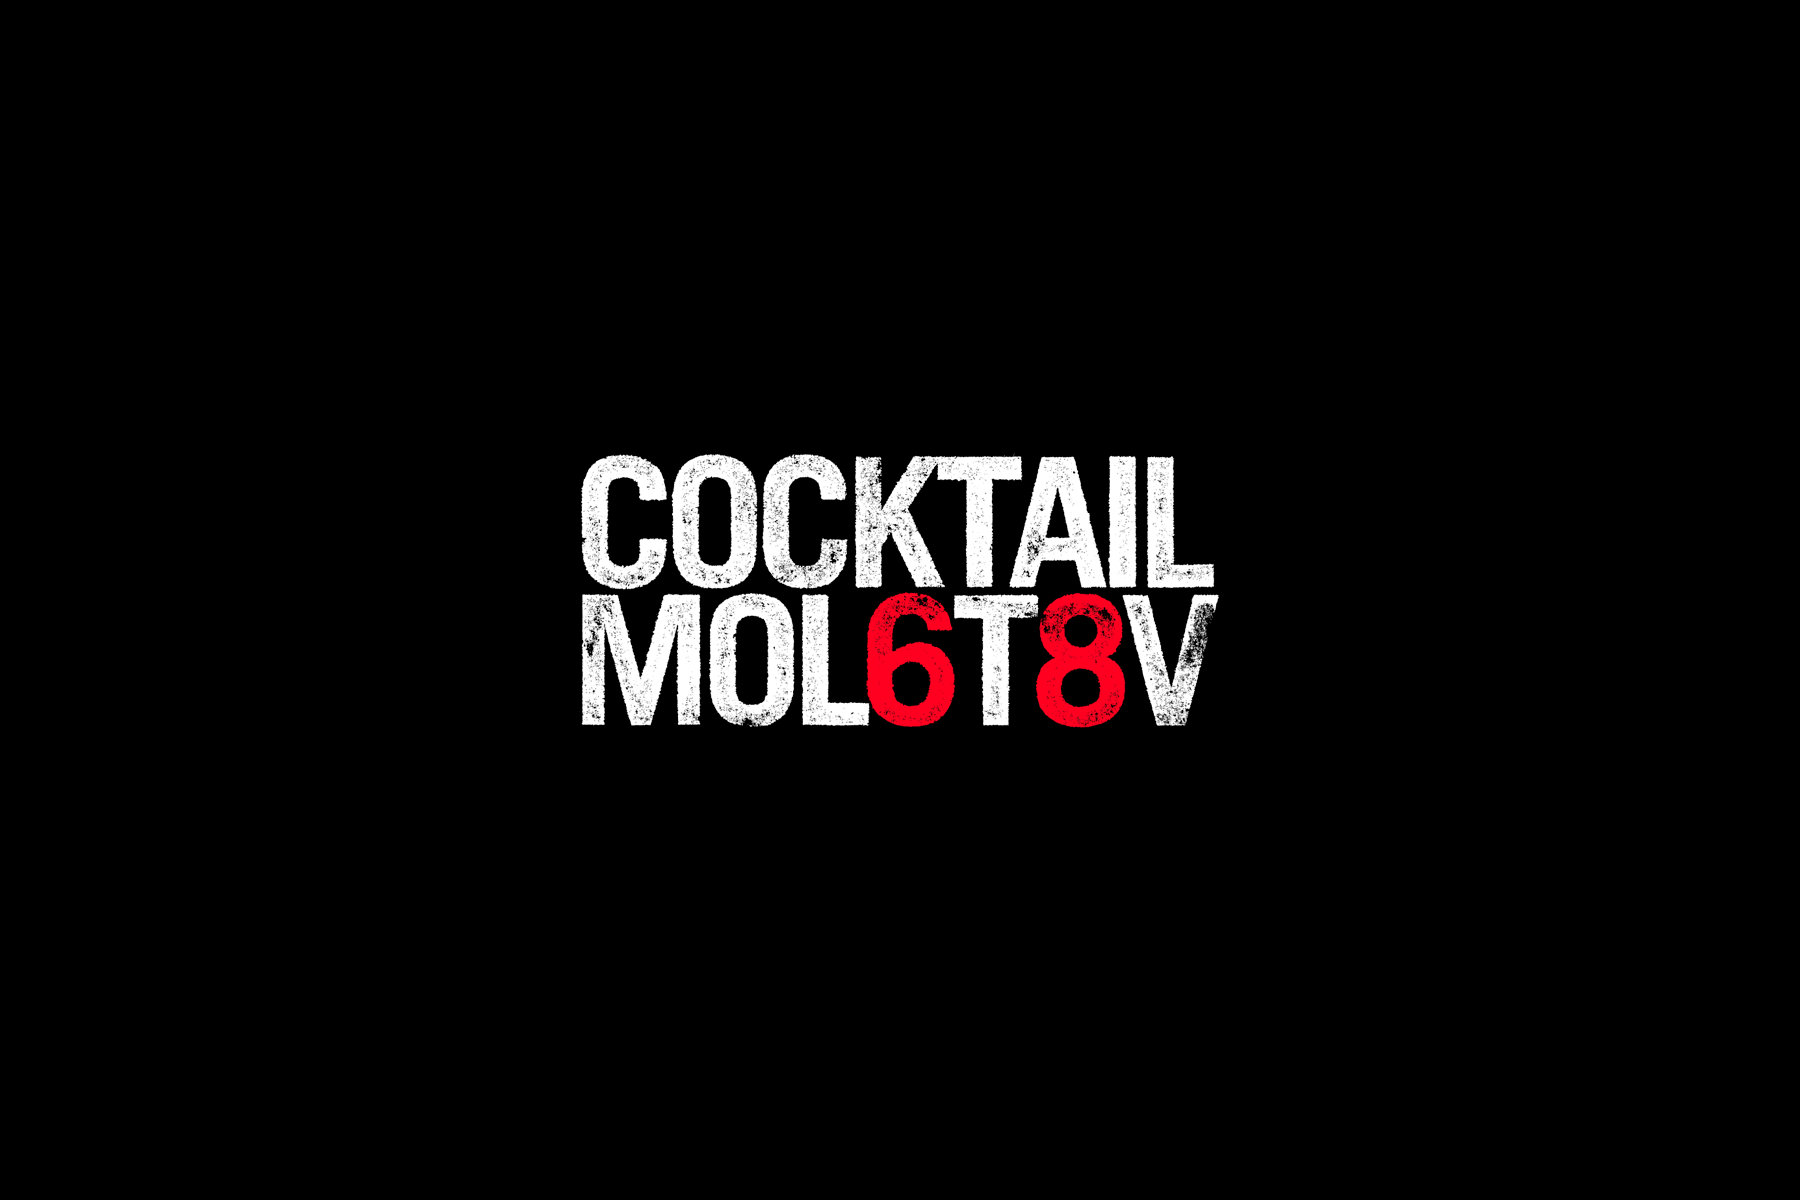 Cocktail Molotov